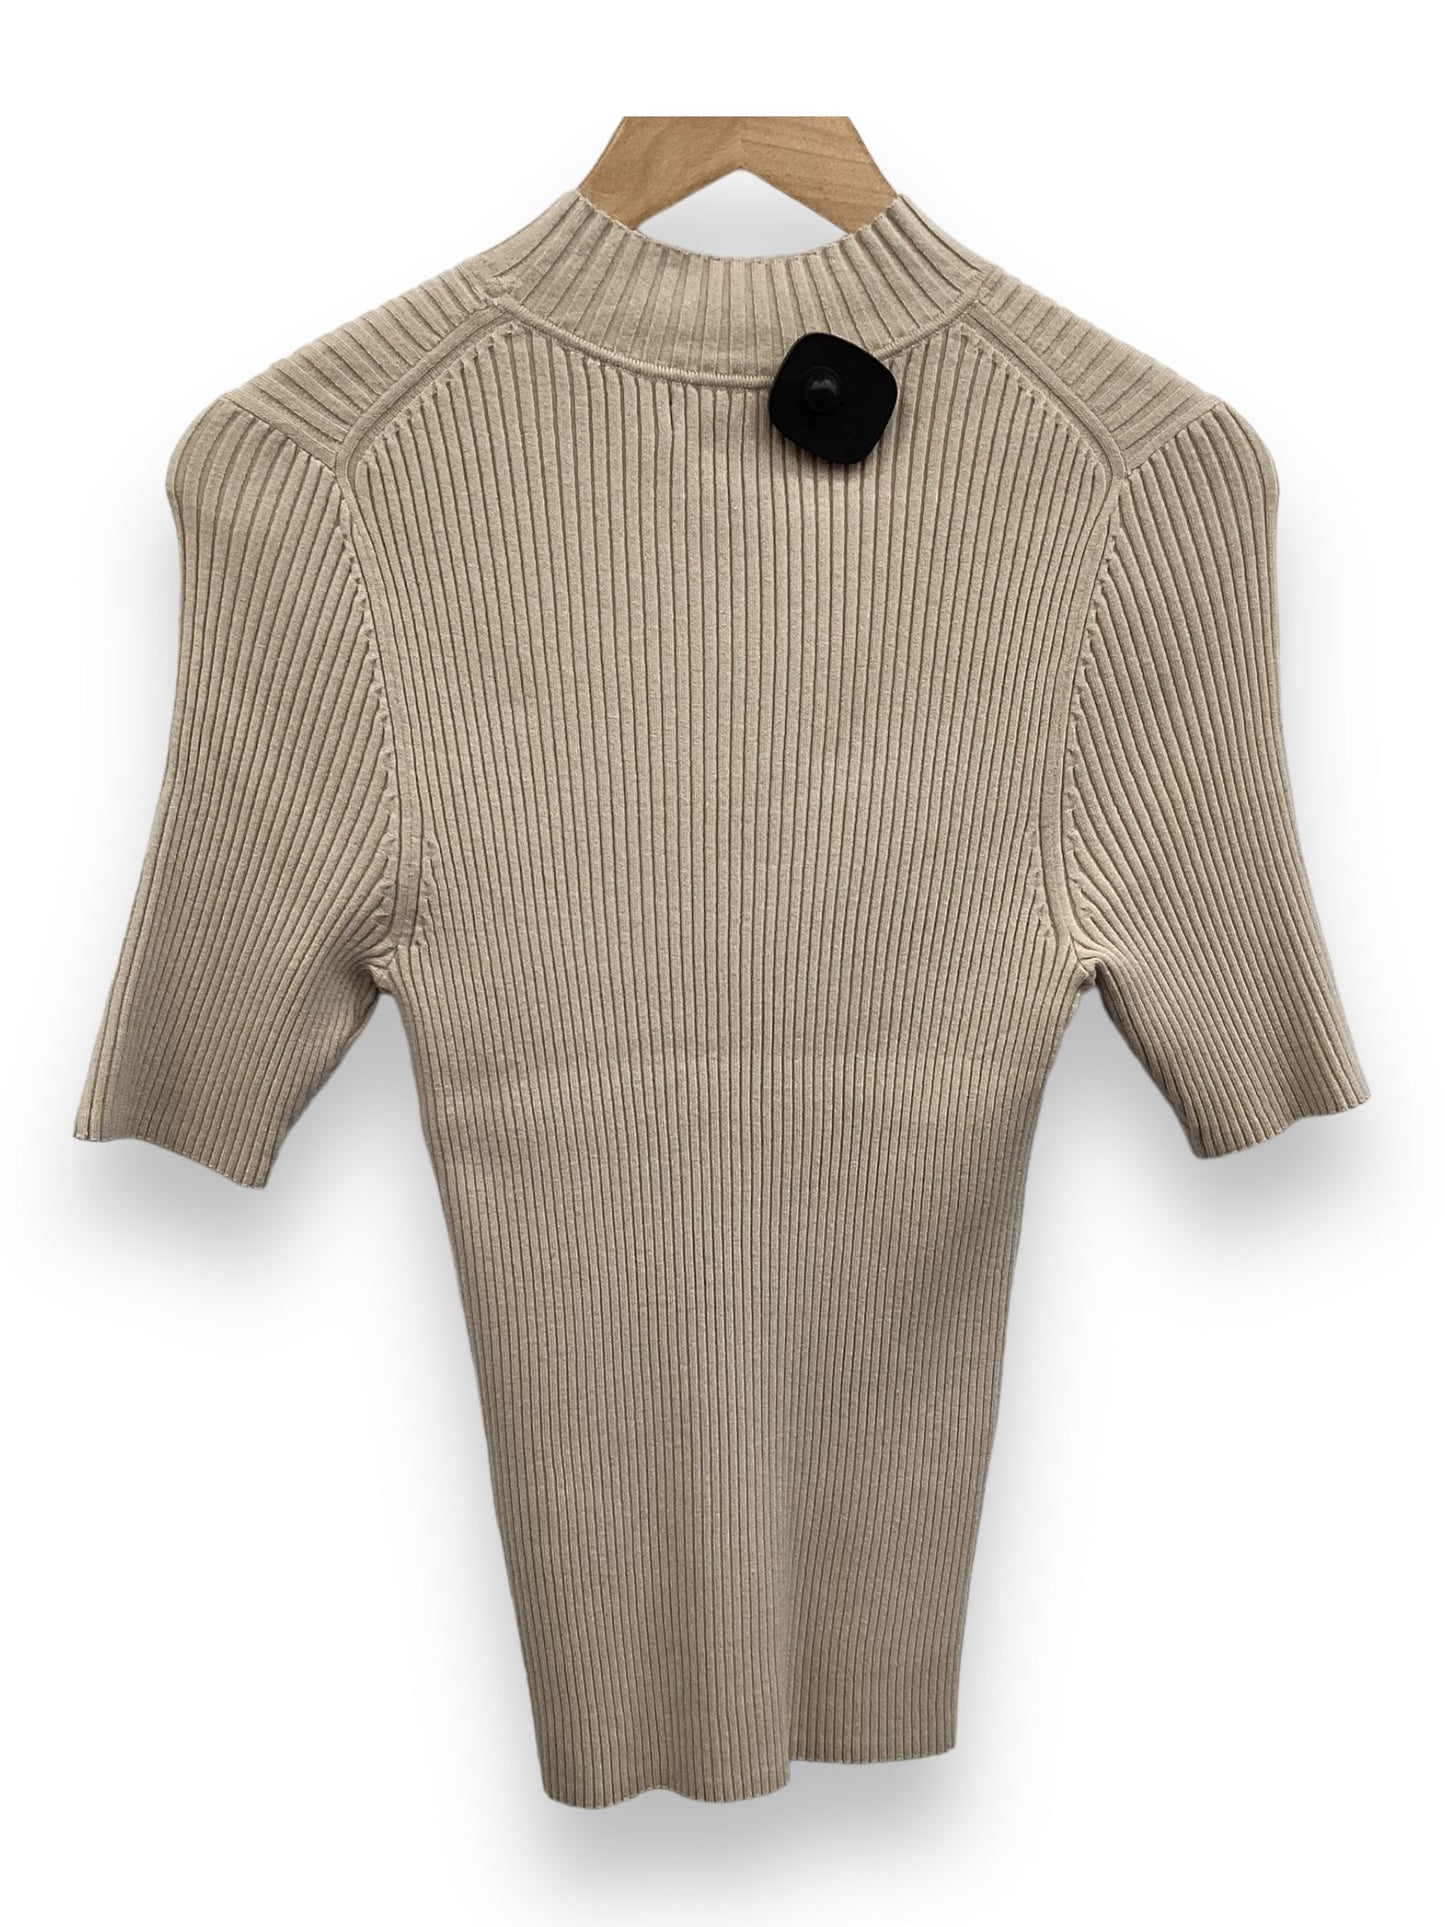 Tan Sweater Short Sleeve Banana Republic, Size L